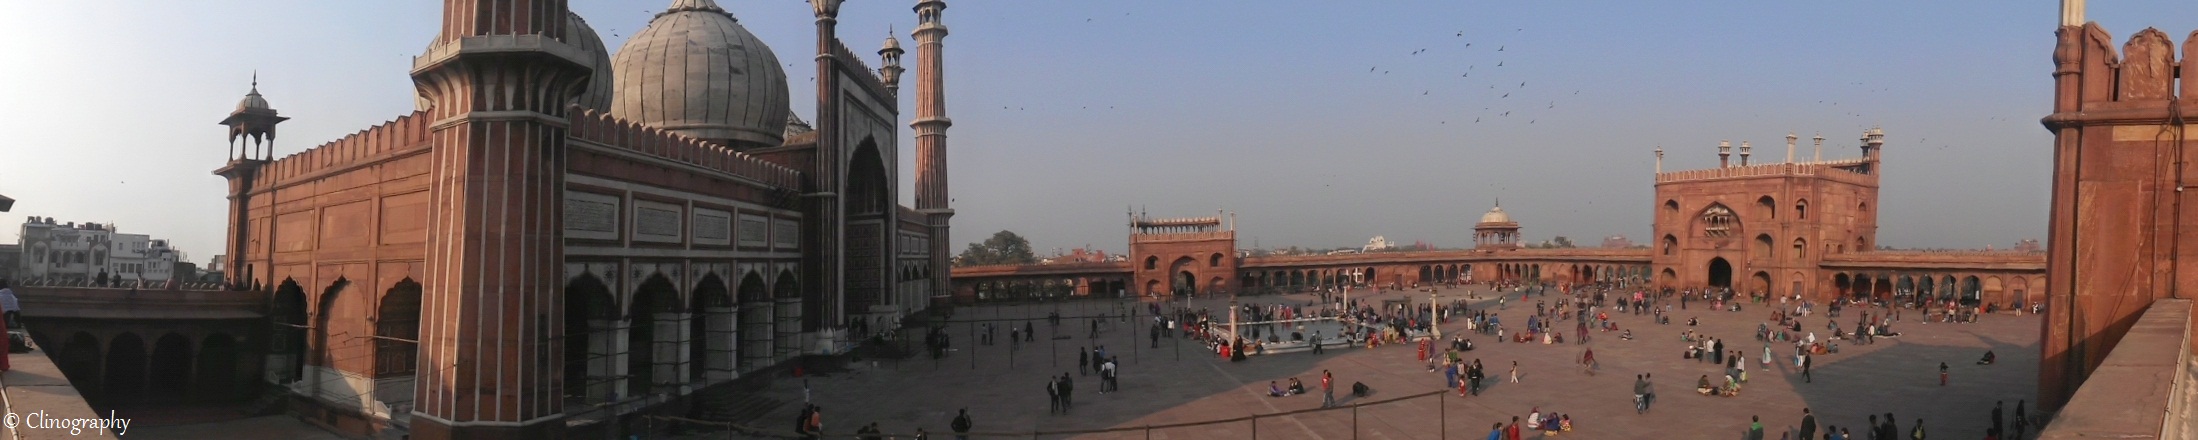 delhi ki jama masjid fondo de pantalla,plaza de la ciudad,edificio,ciudad,arquitectura,monumento